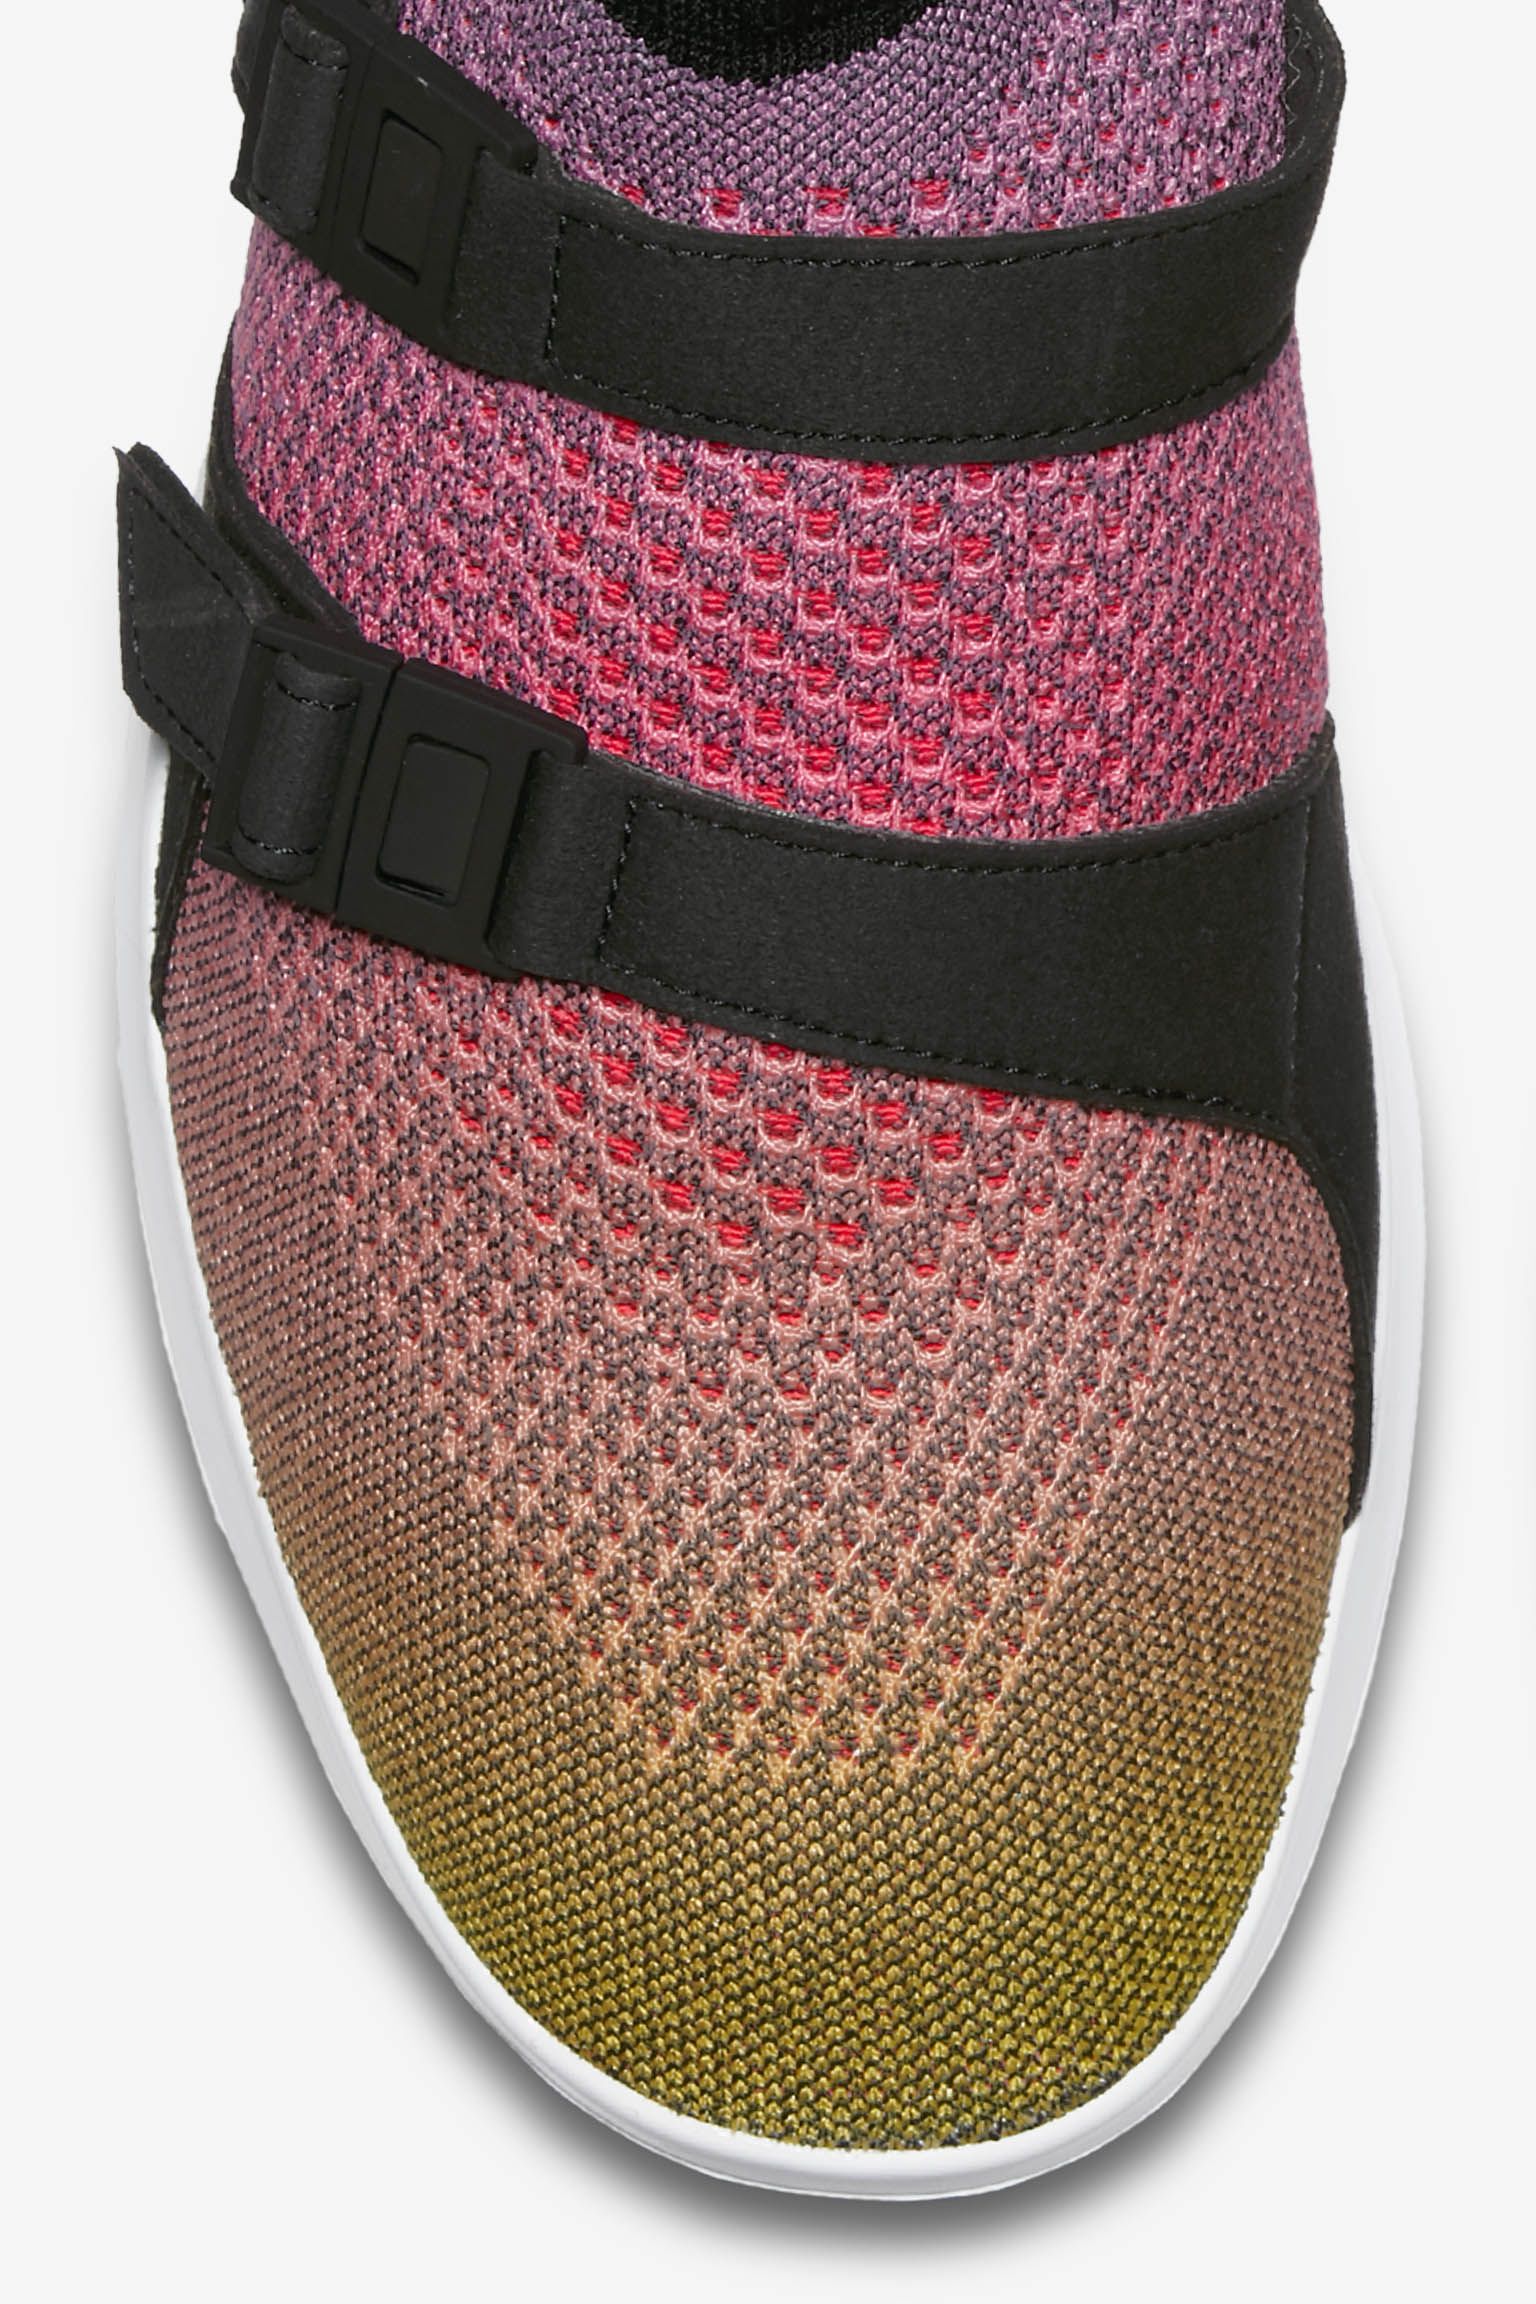 Fecha de lanzamiento de las Nike Air Sock Racer Ultra Flyknit Premium "Yellow Strike Racer Pink". Nike SNKRS ES